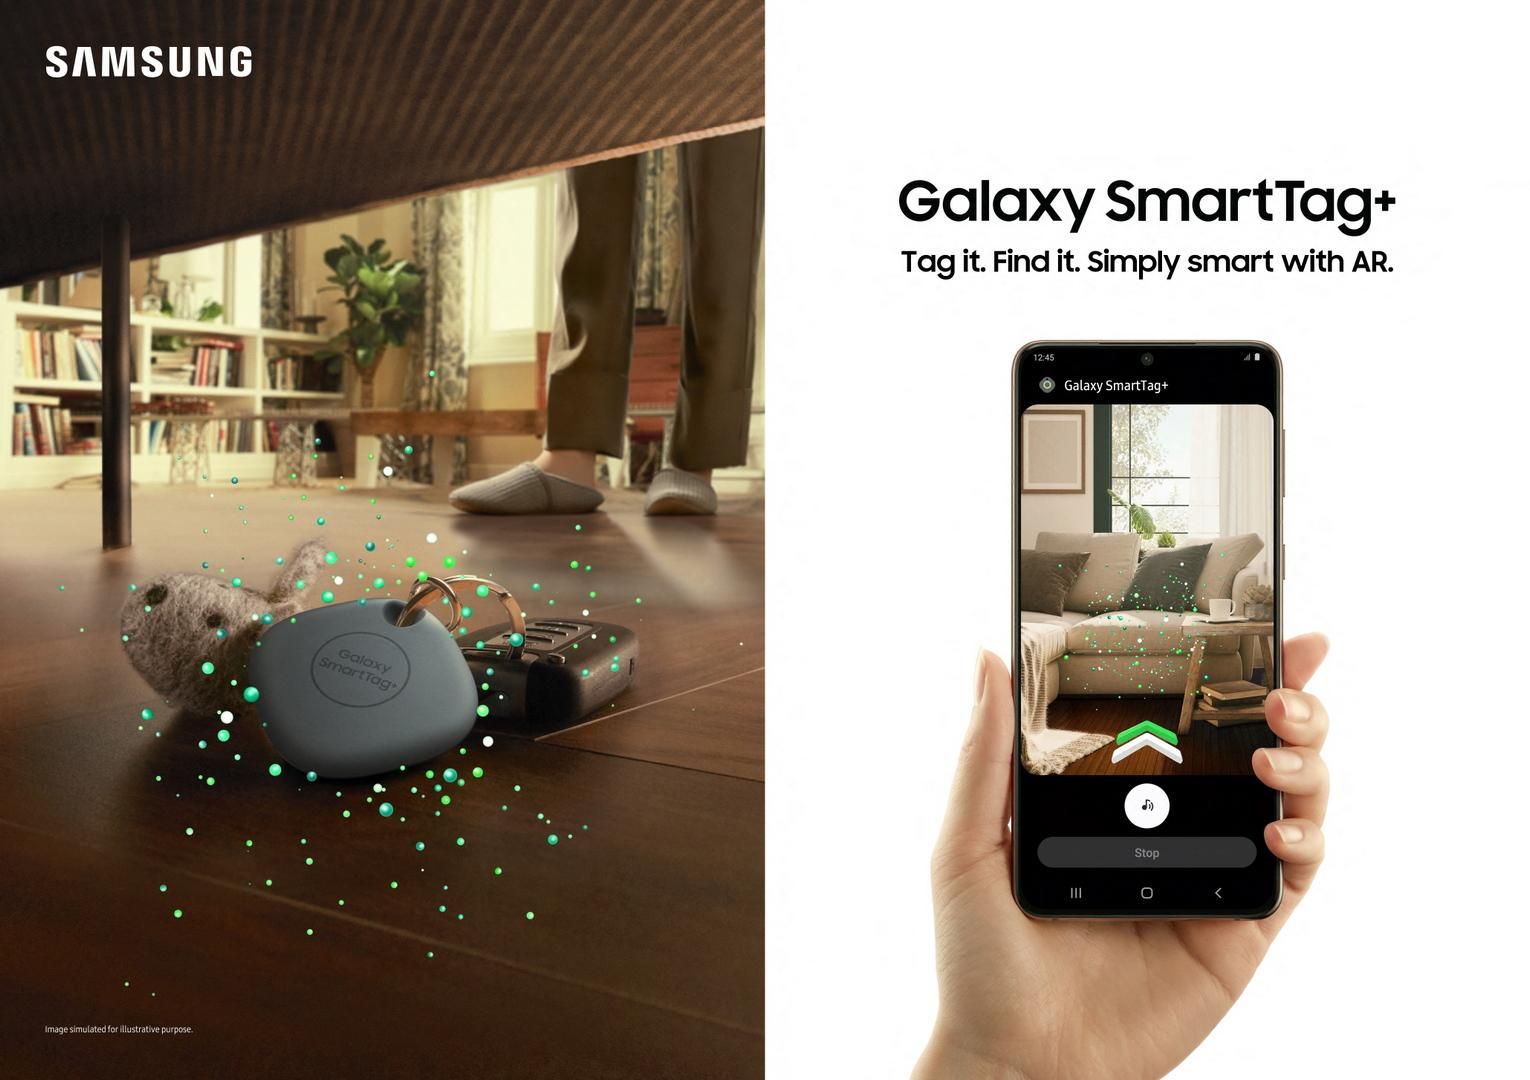 Samsung Galaxy SmartTags+